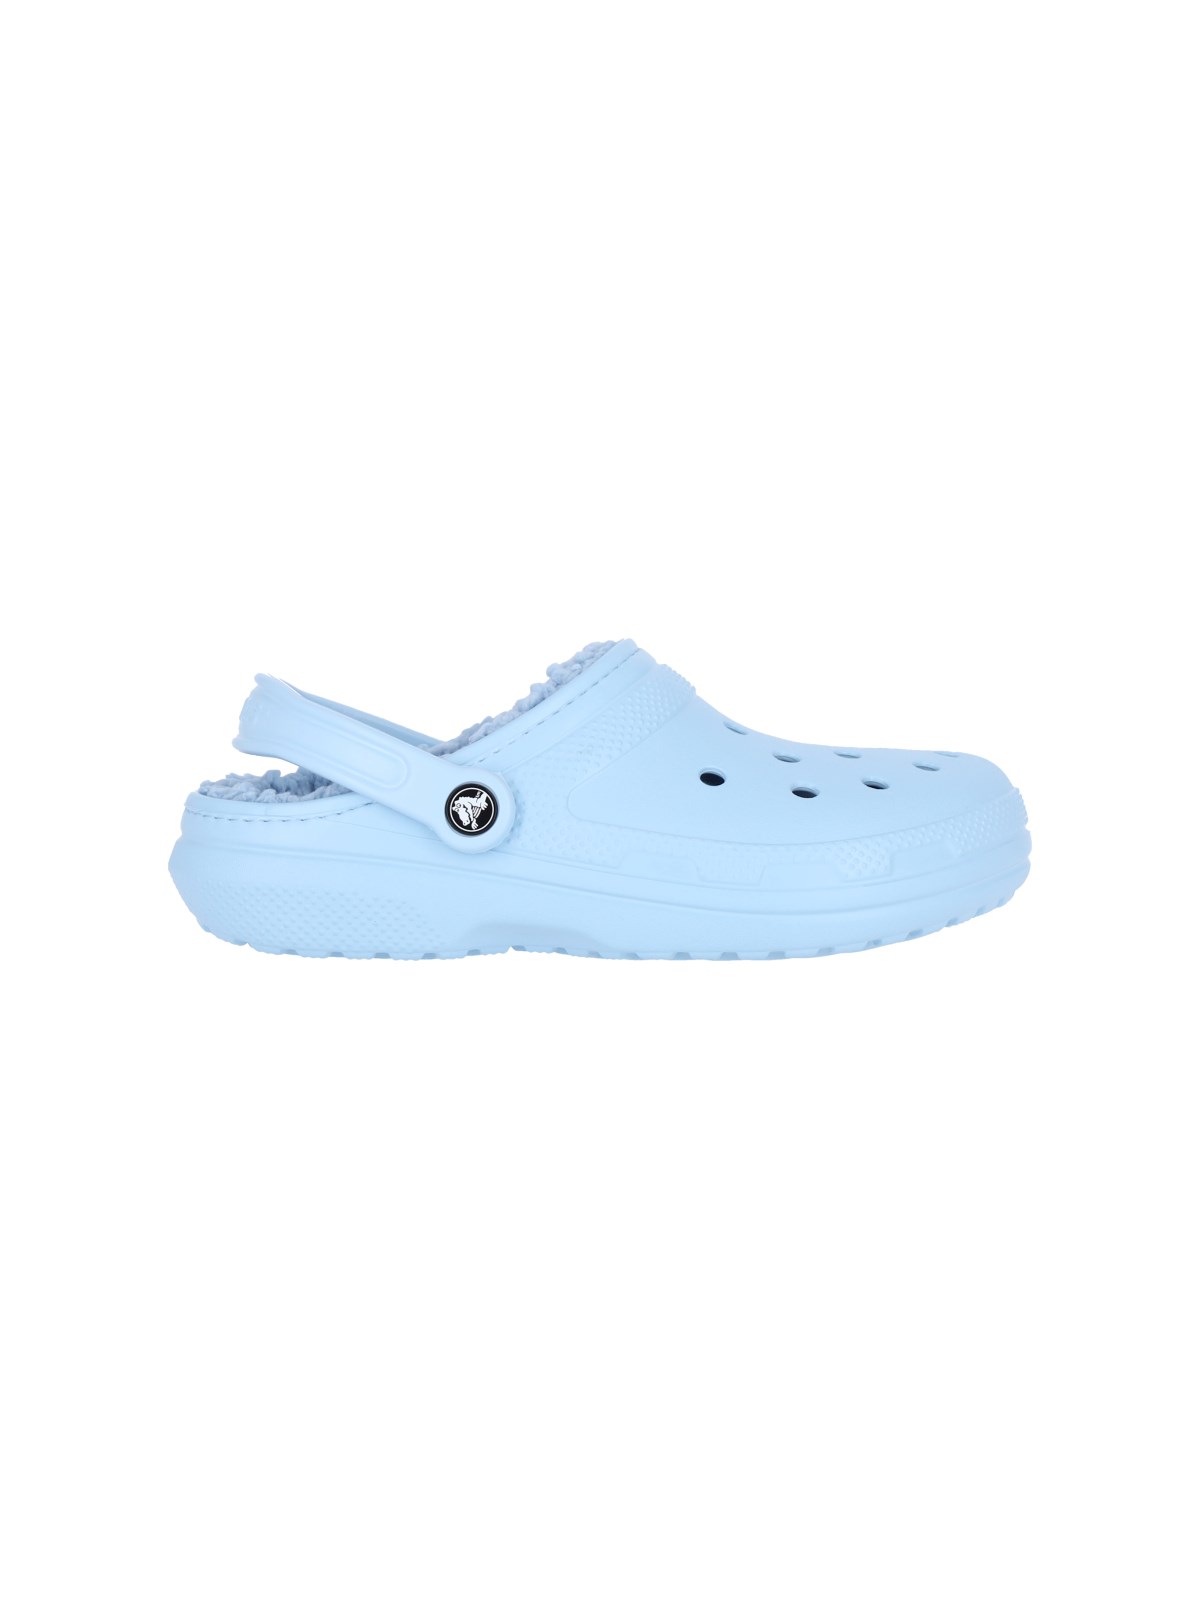 Crocs Lined Classic Clog Slipper In Blue